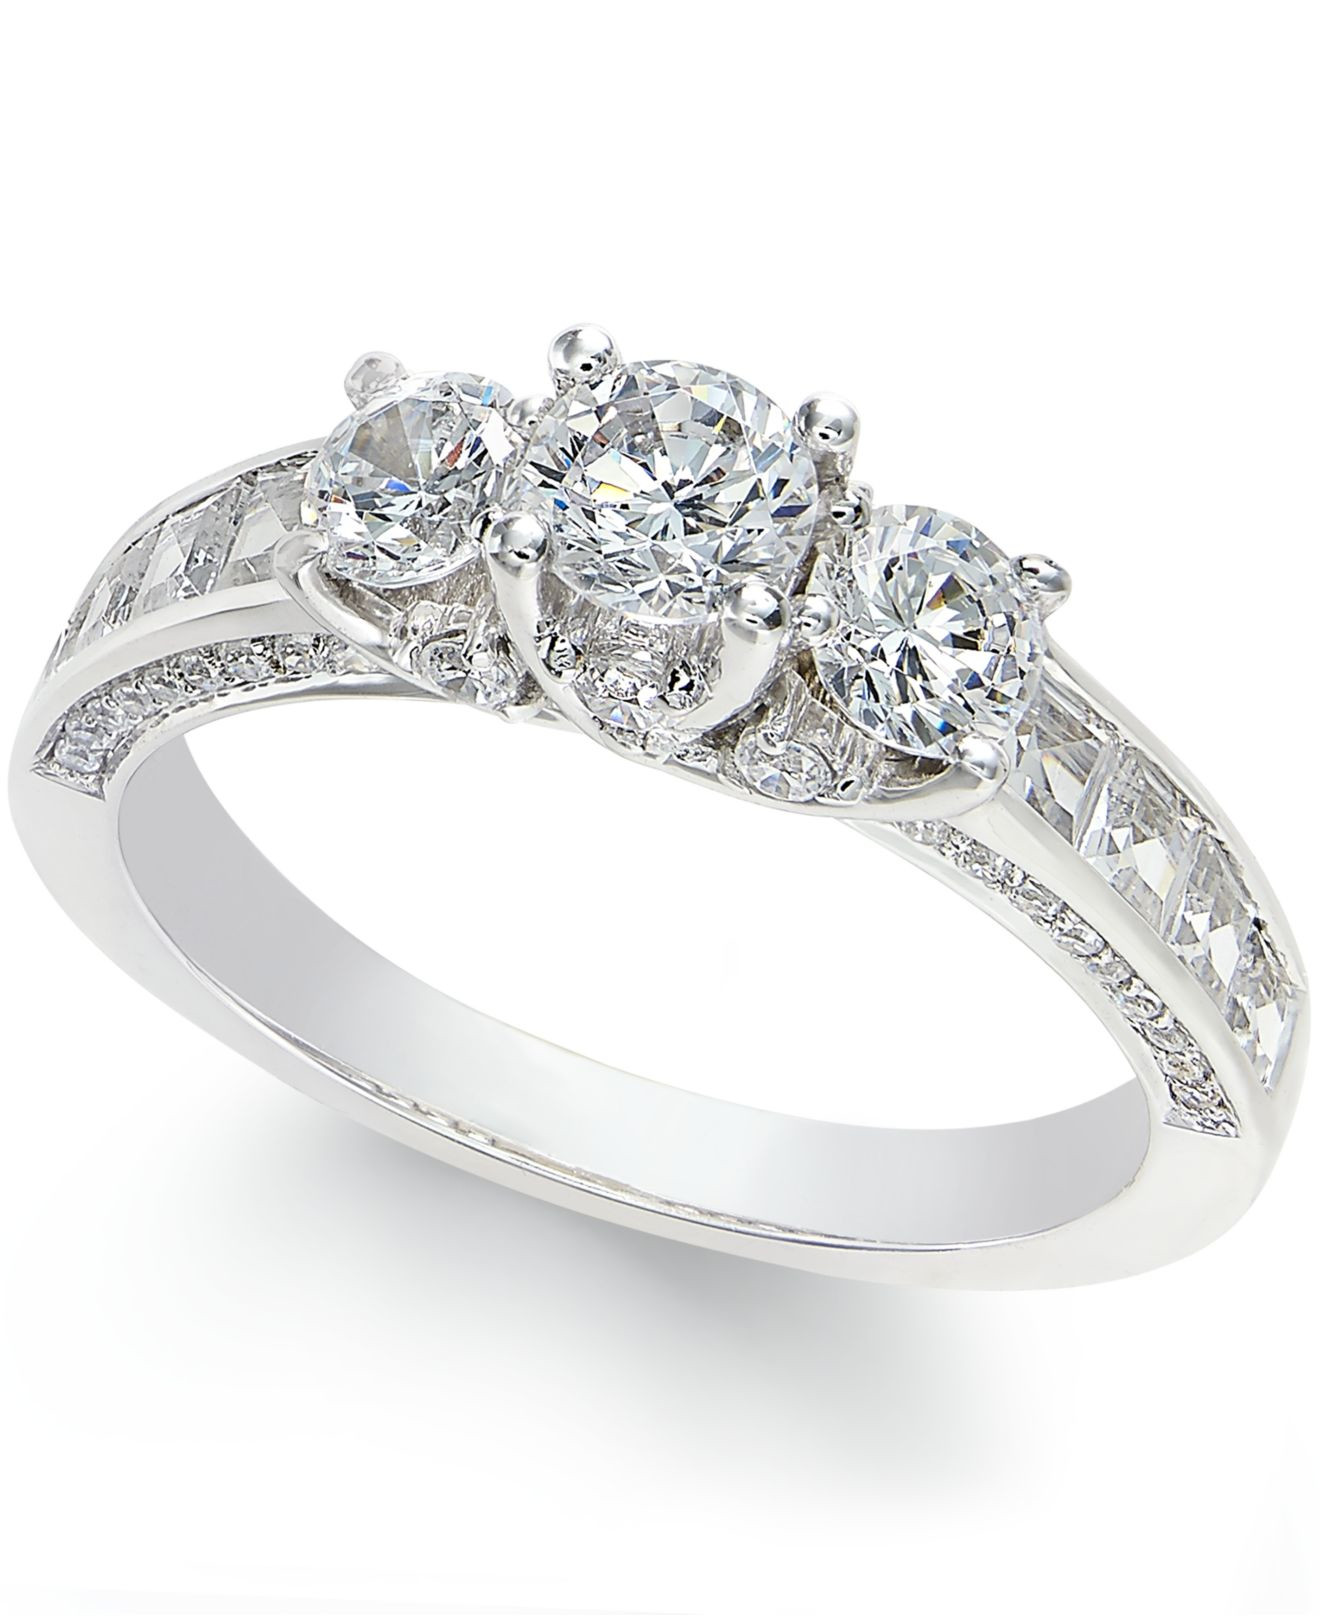 Macys Diamond Rings
 Macy s Diamond 3 stone Ring 2 C t T w In 14k White